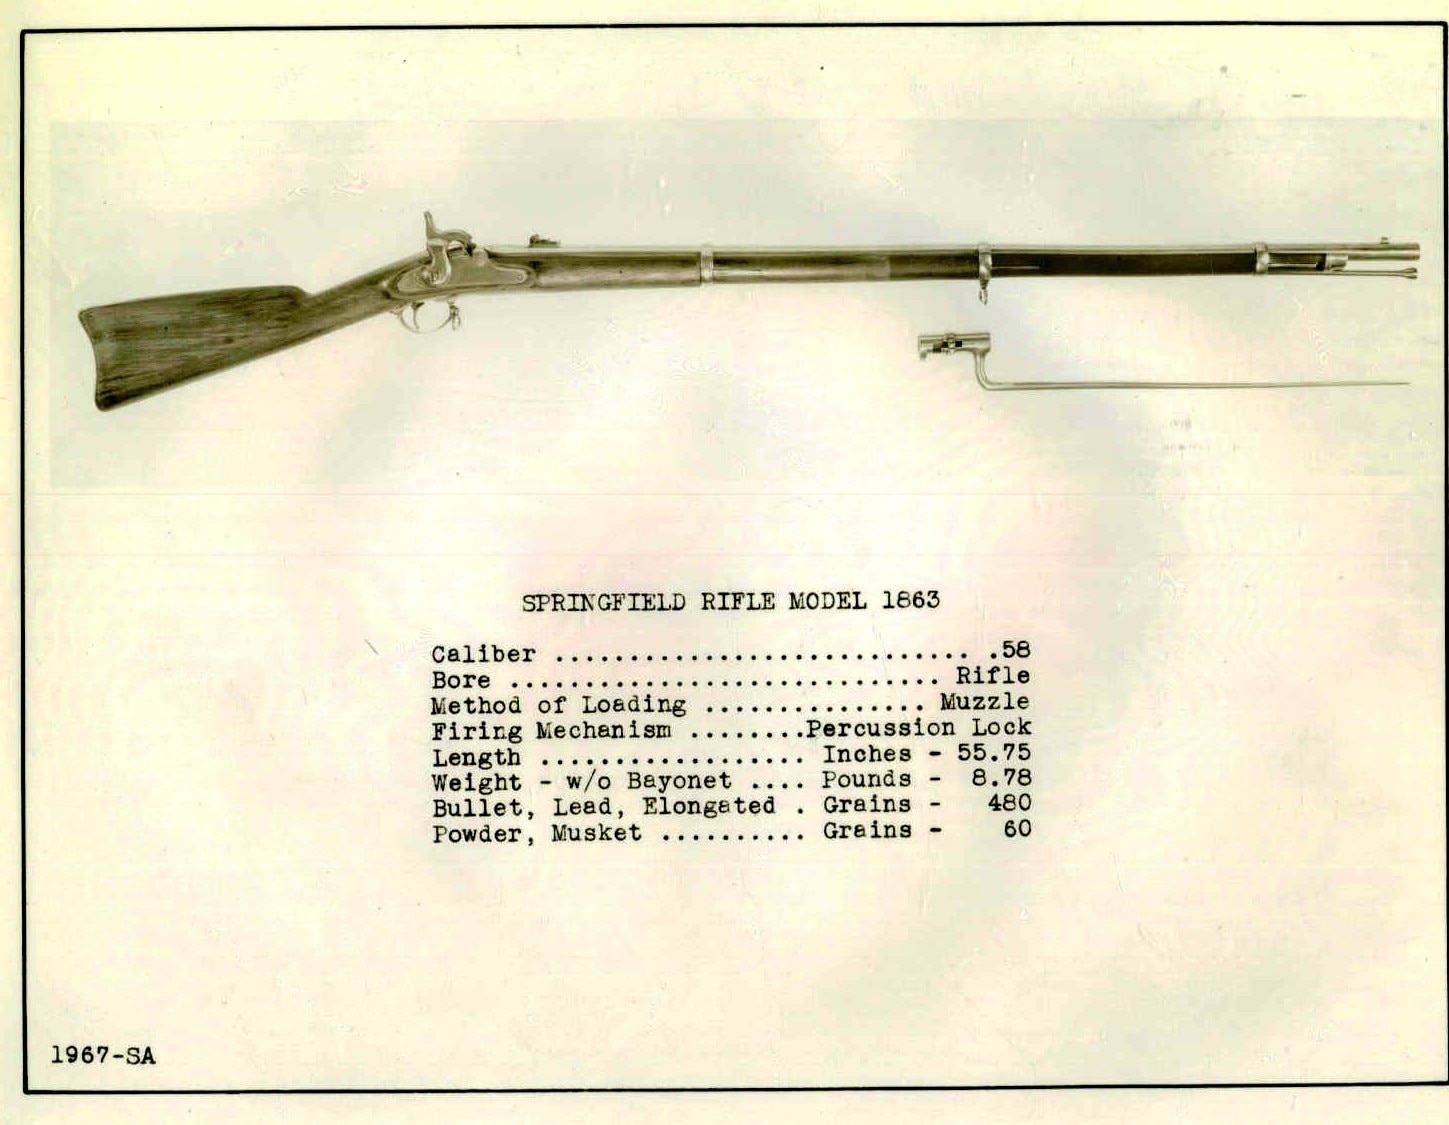 58 cal Springfield Rifle M1863 1967-SA.A.1